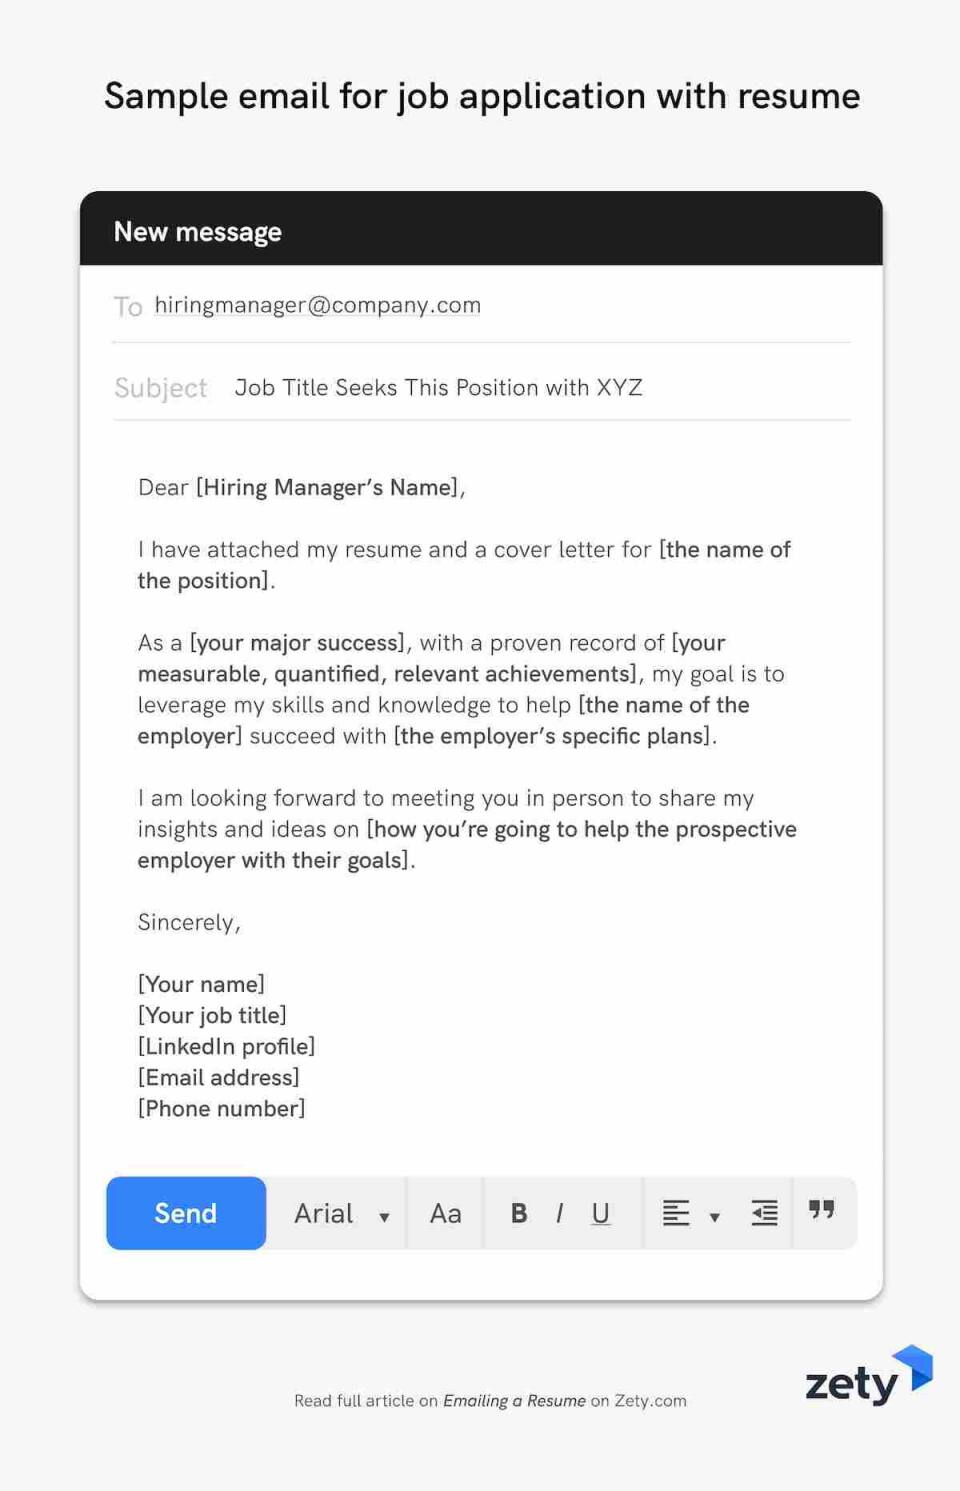 Responding to a job posting via email template